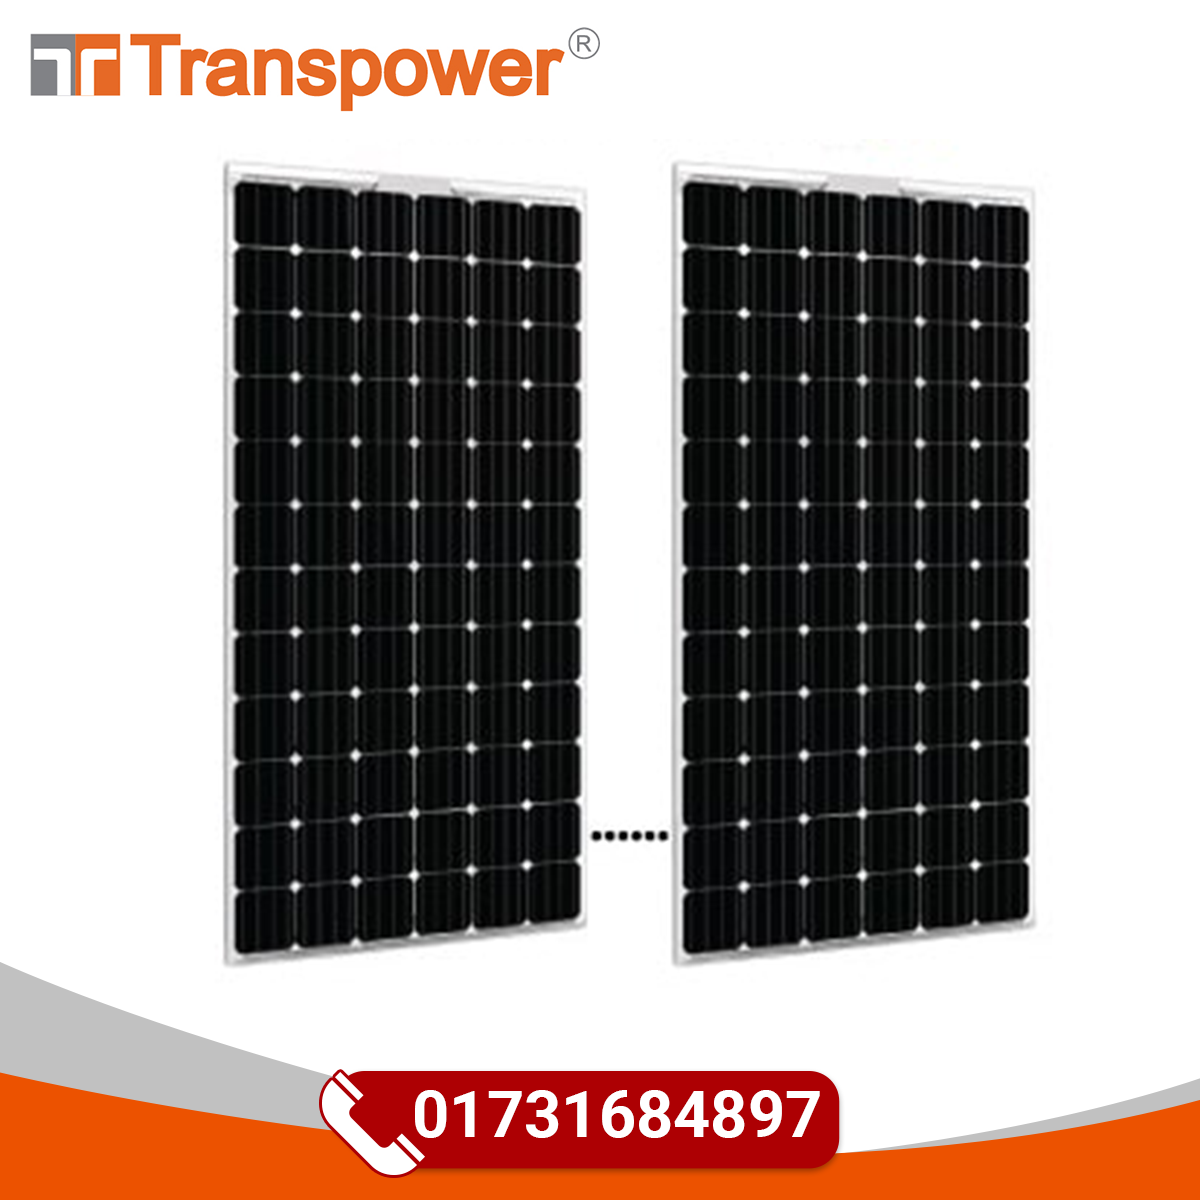 1 KW Solar Power System (On Grid)